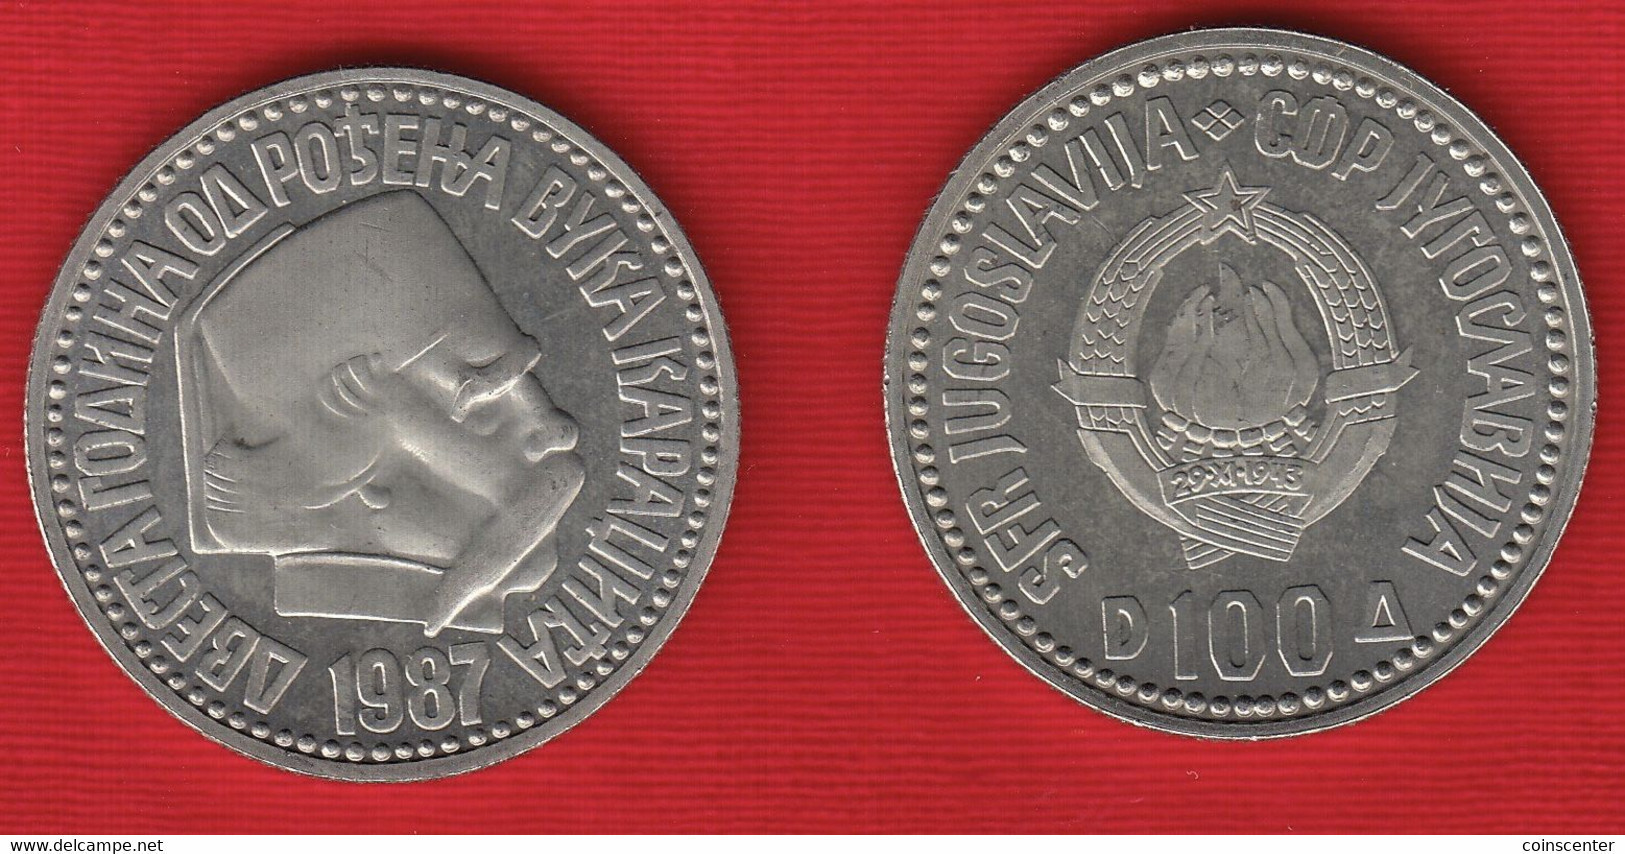 Yugoslavia 100 Dinara 1987 Km#127 "Birth Of Vuk Karadzic" UNC - Yugoslavia